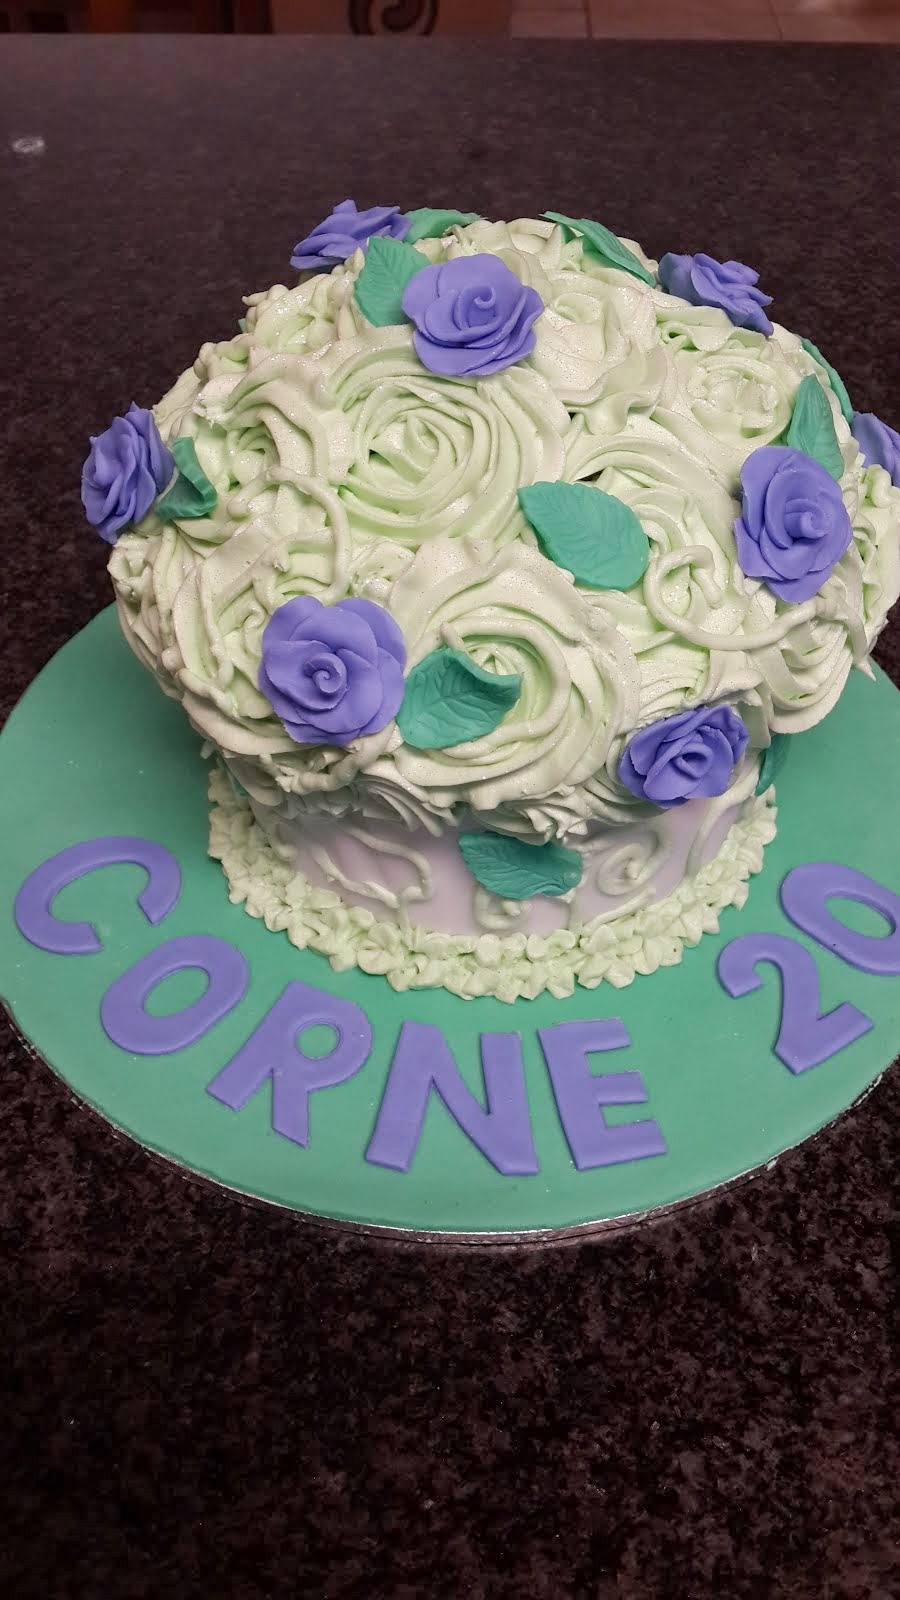 Giant Cupcake for Corne